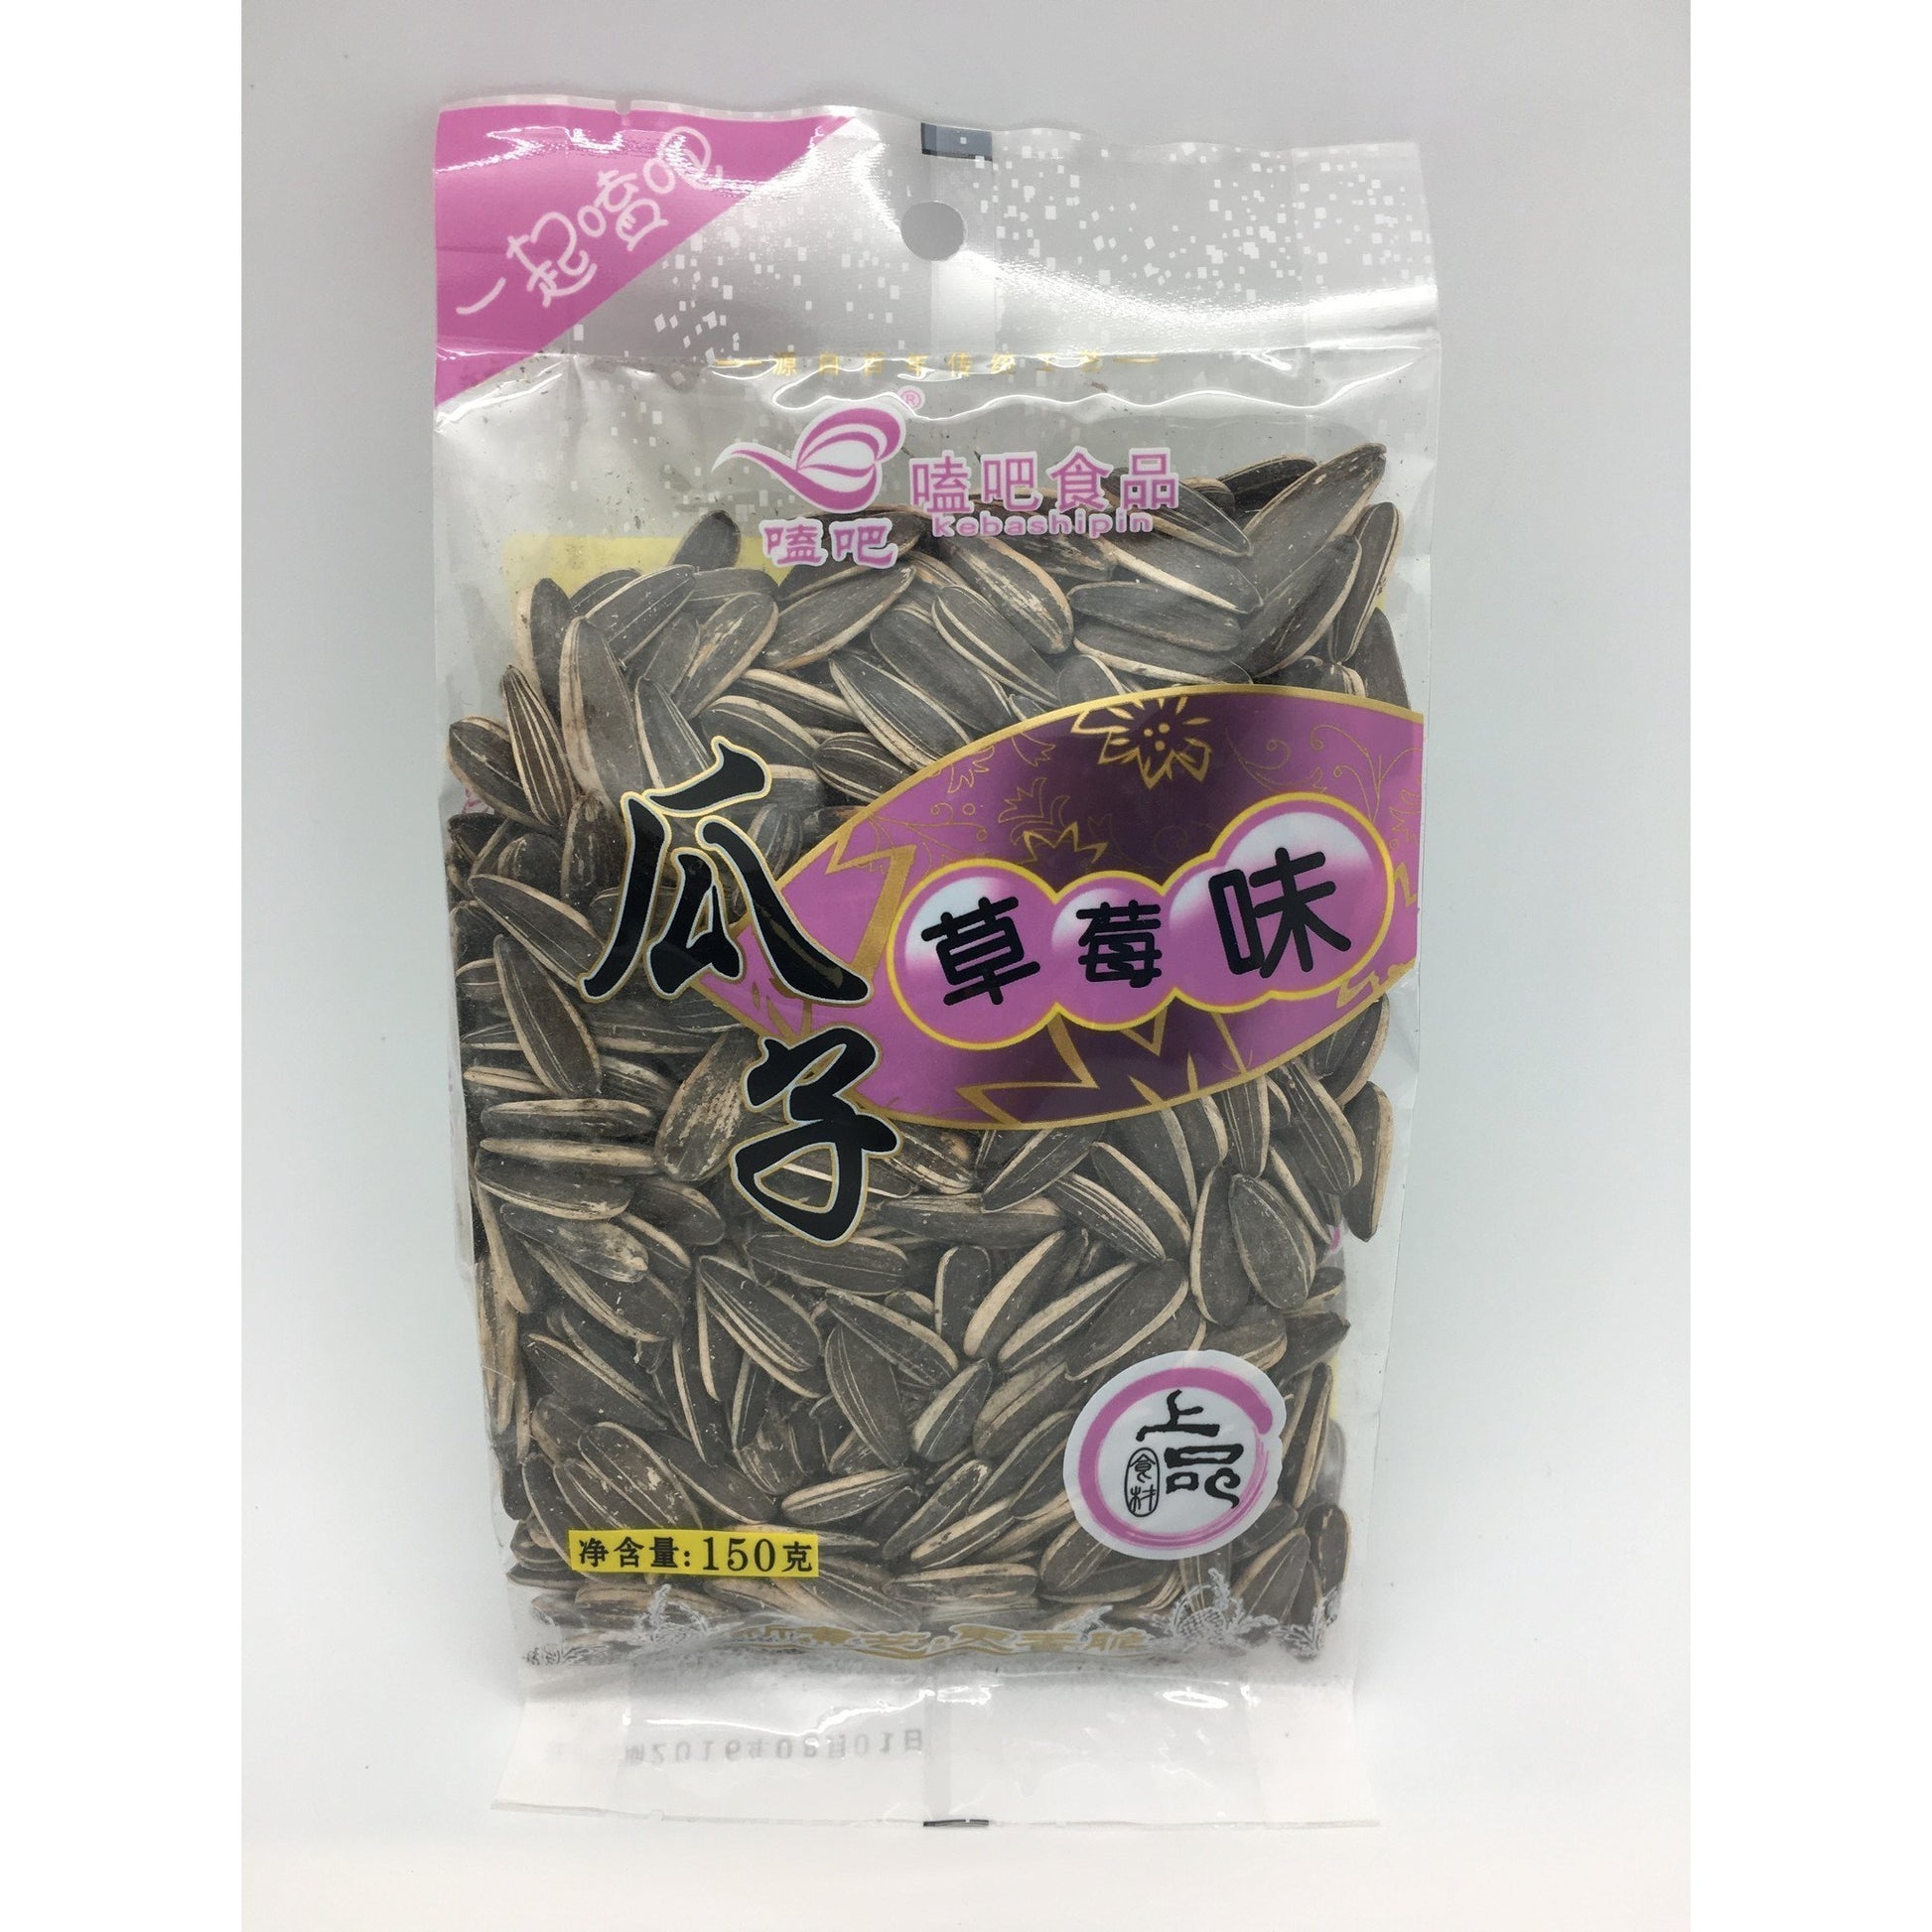 J053AS Ke Ba Brand - Sunflower Seeds Strawberry Flavour 150g - 40 bags / 1 CTN - New Eastland Pty Ltd - Asian food wholesalers